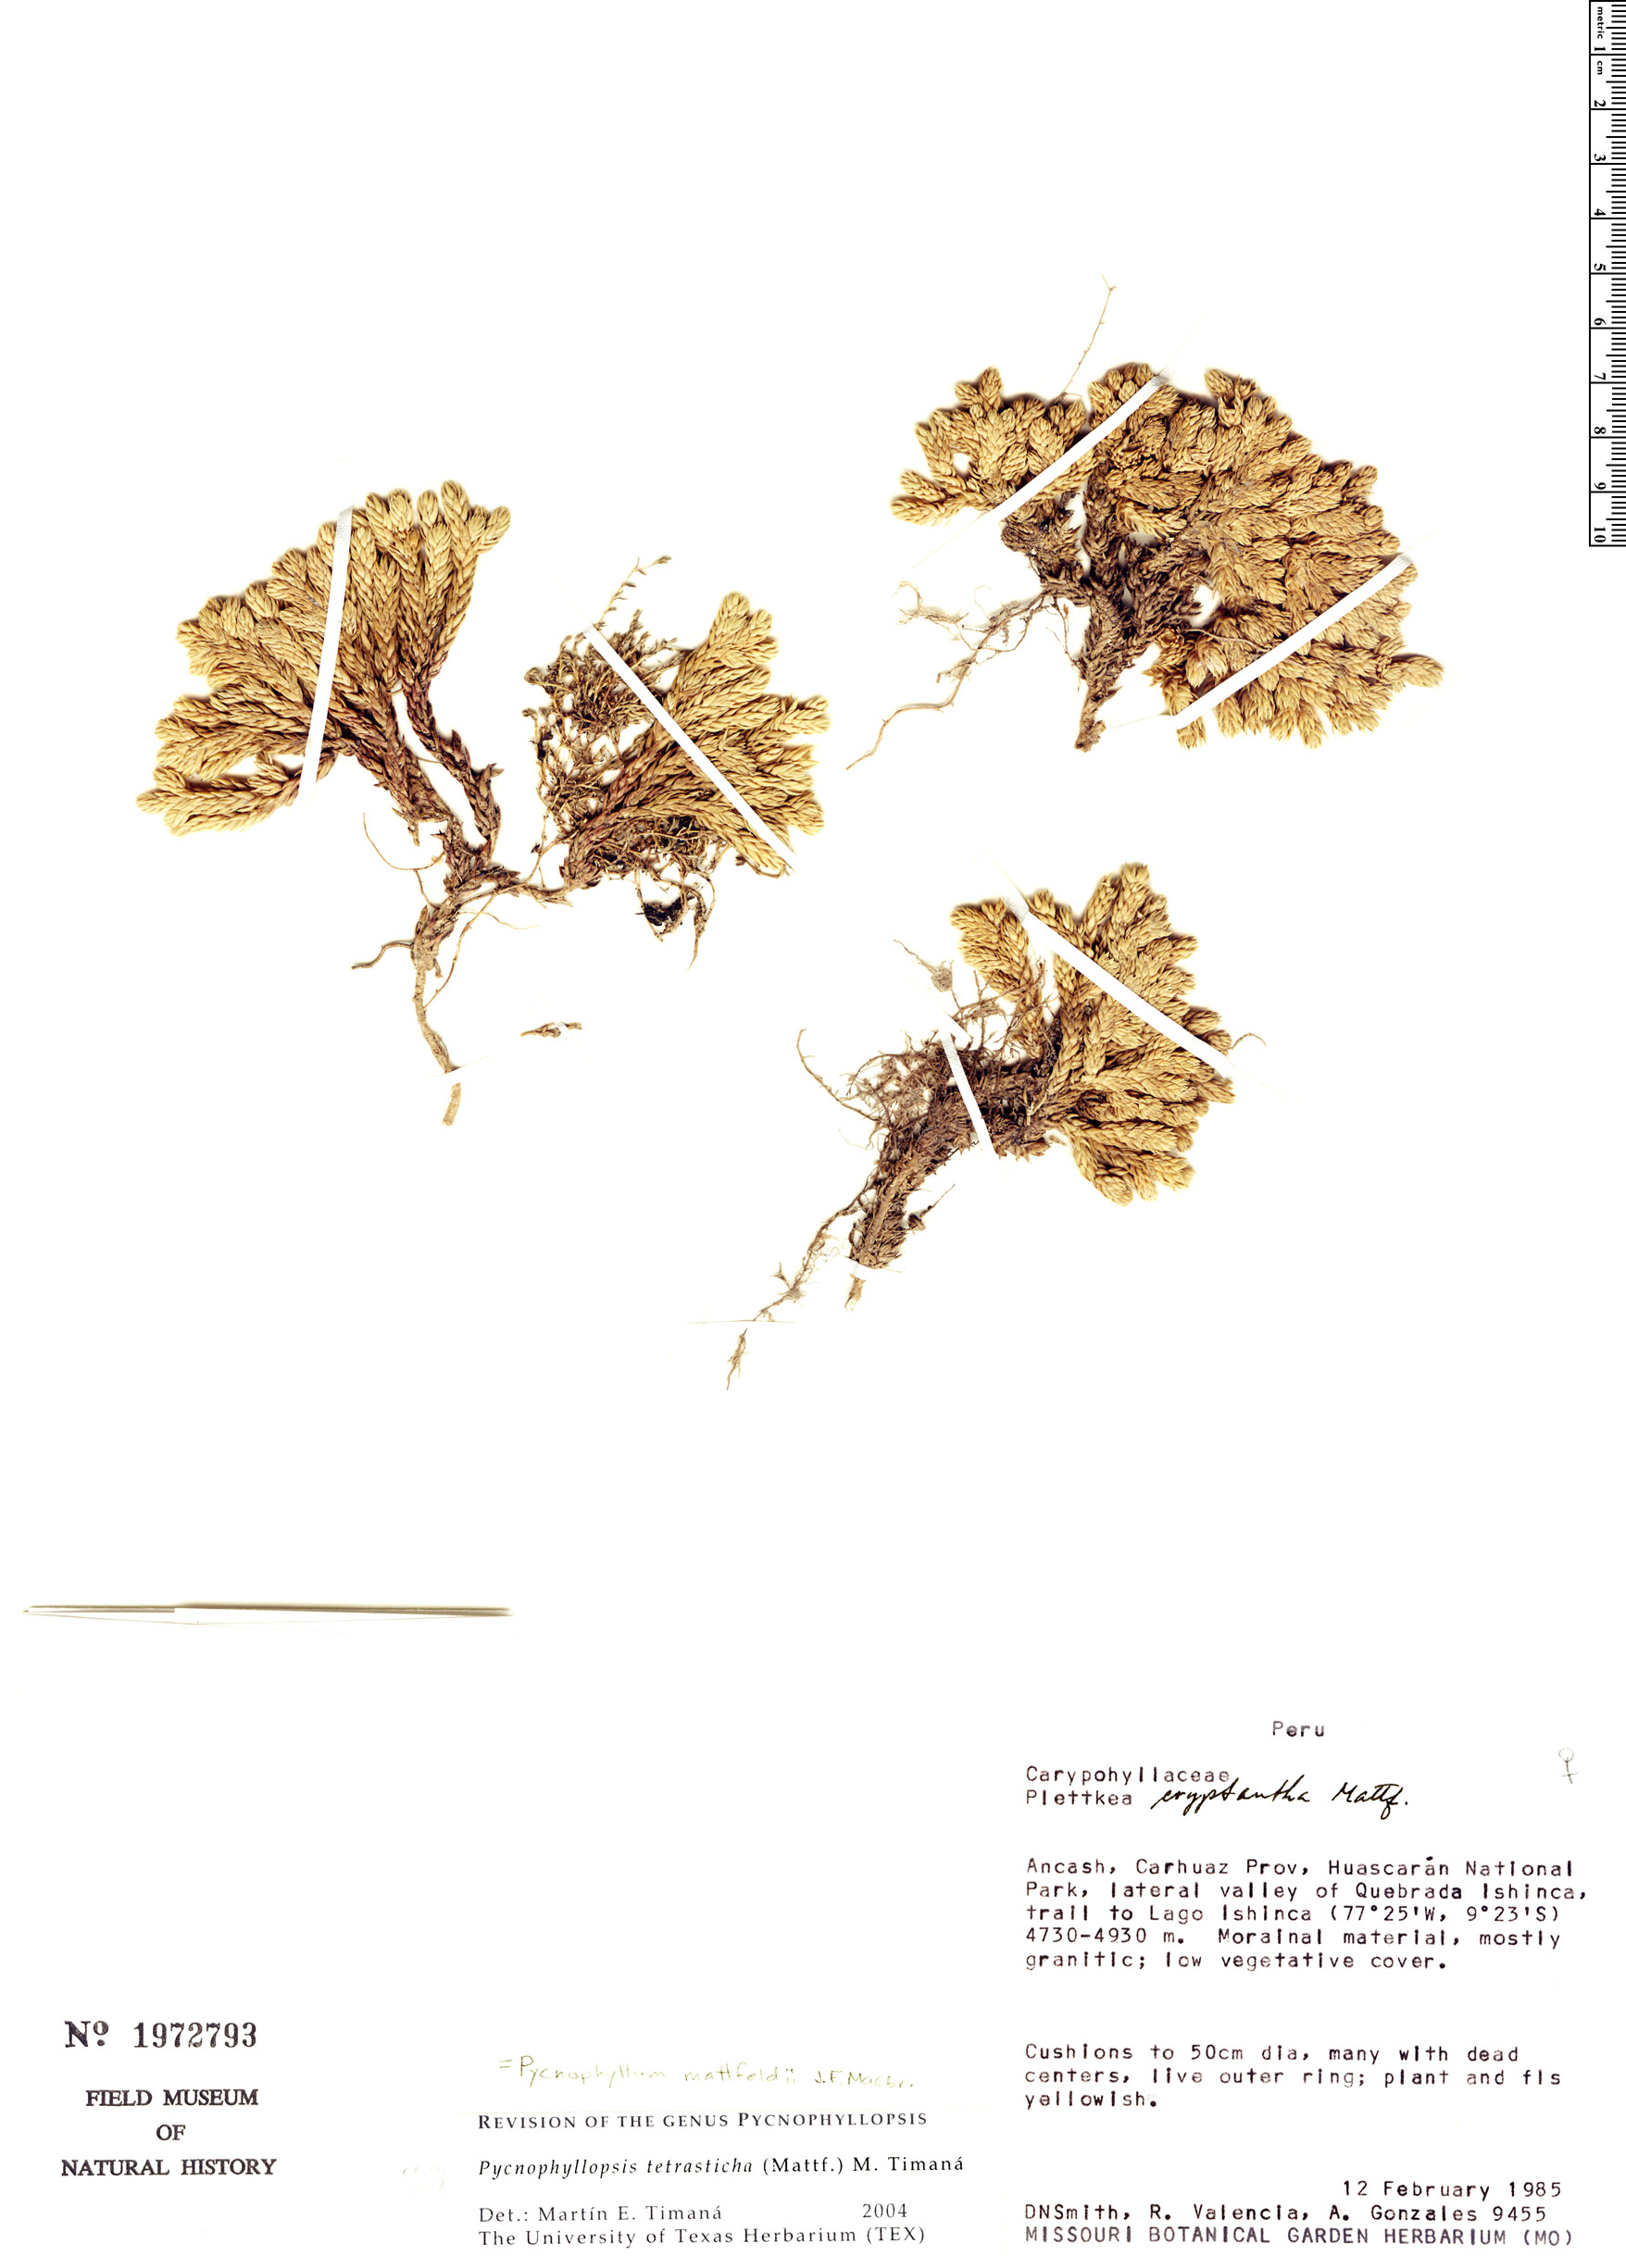 Pycnophyllum image